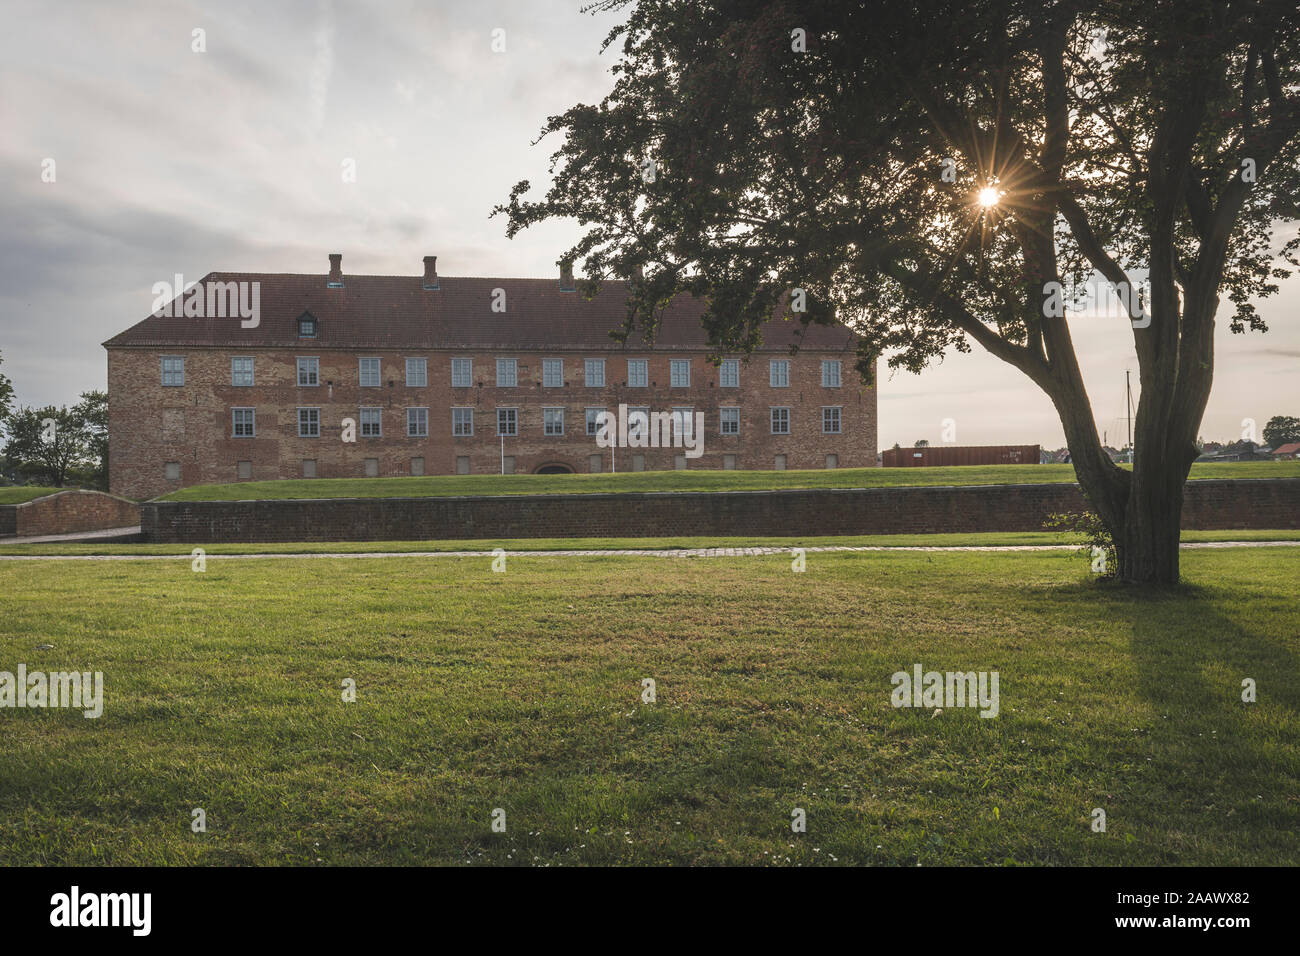 Dänemark, Sonderborg, Schloss Sonderborg Fassade von Rasen gesehen Stockfoto